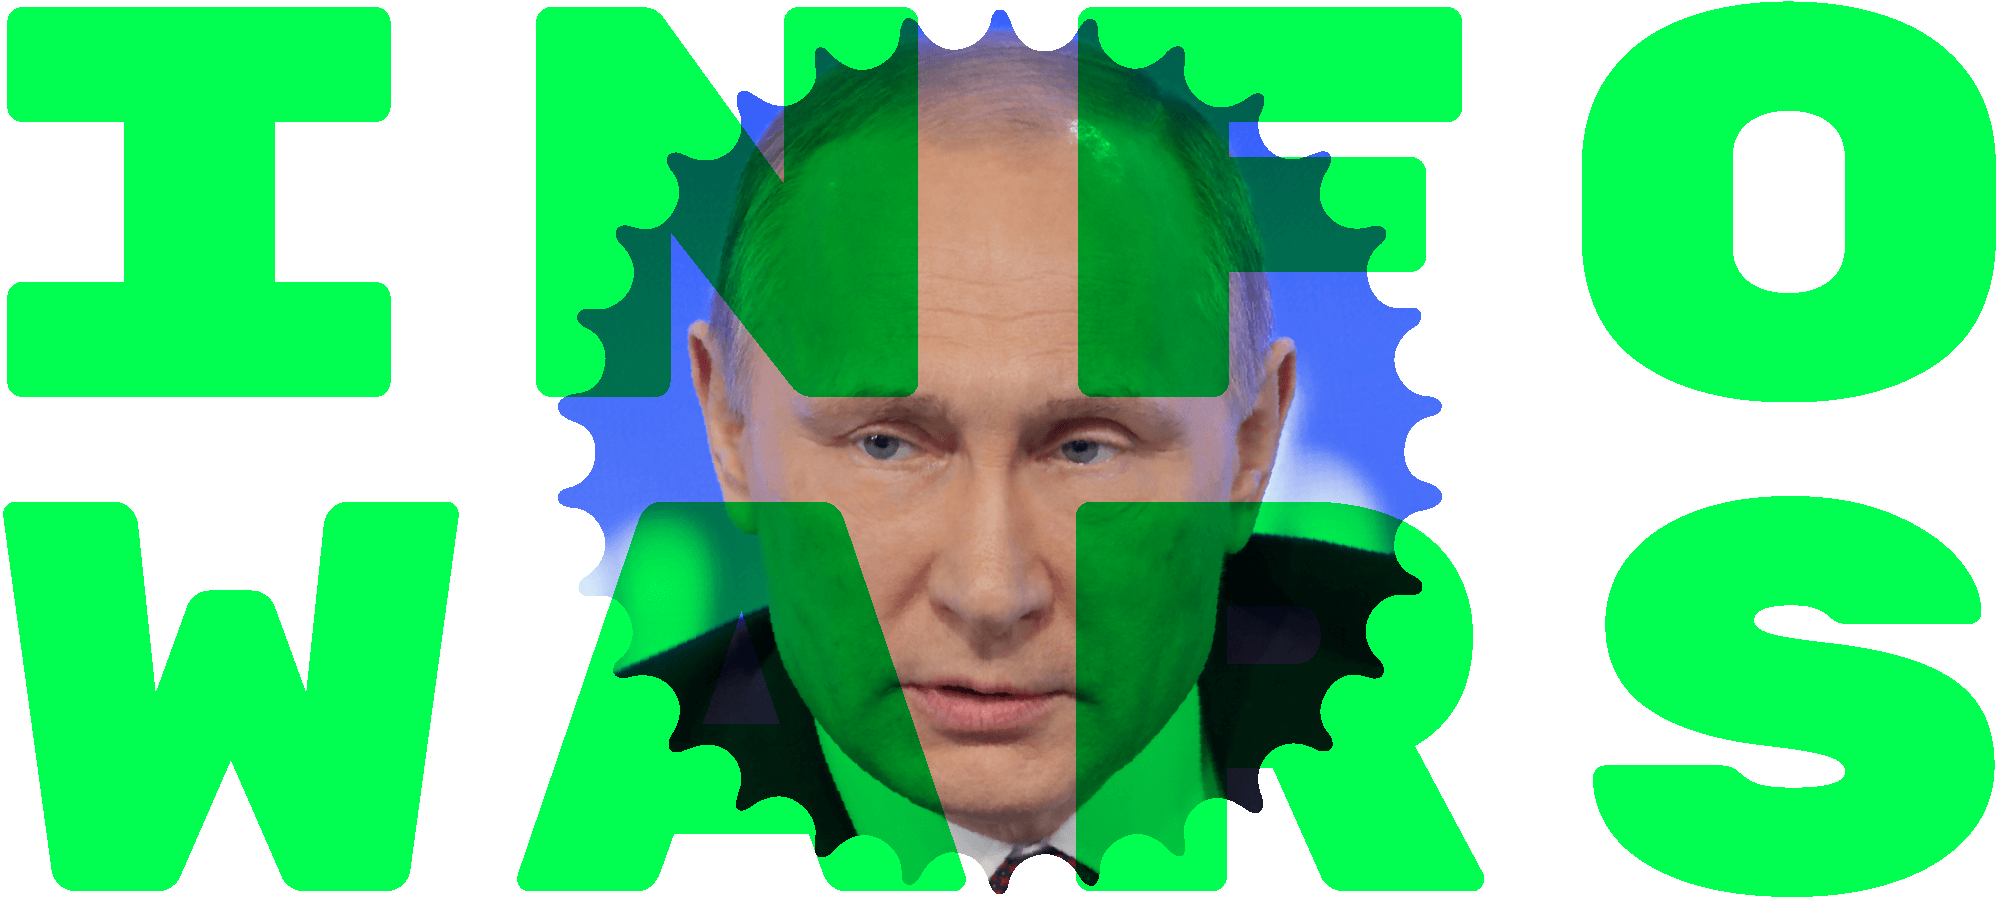 INFO WARS header illustration with Putin pic